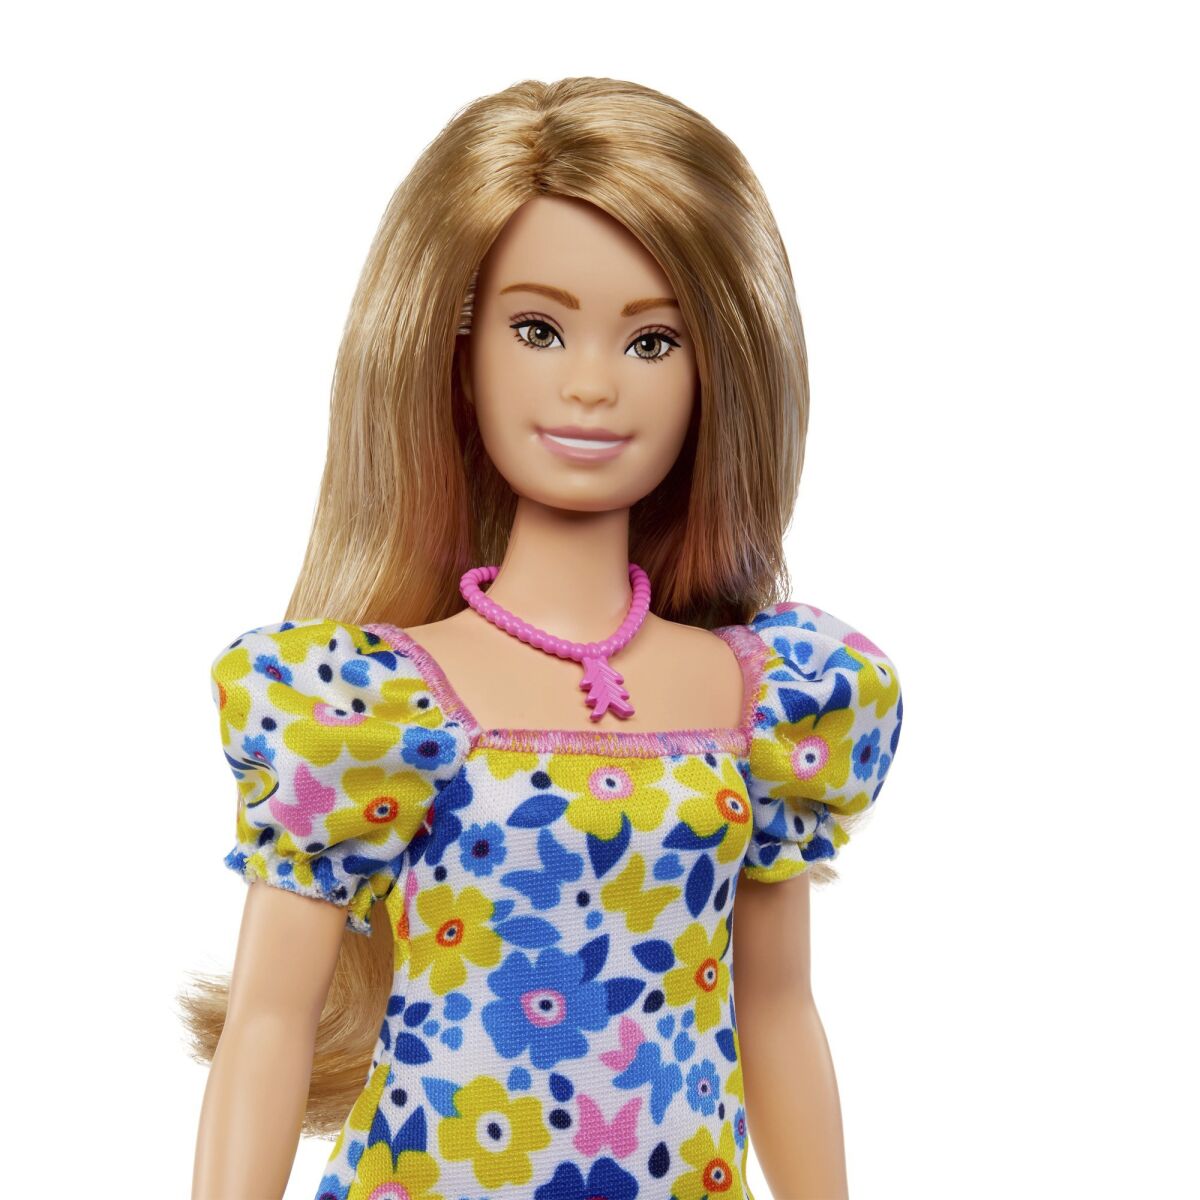 Mattel presenta 1ra muñeca Barbie con síndrome de Down - Los Angeles Times